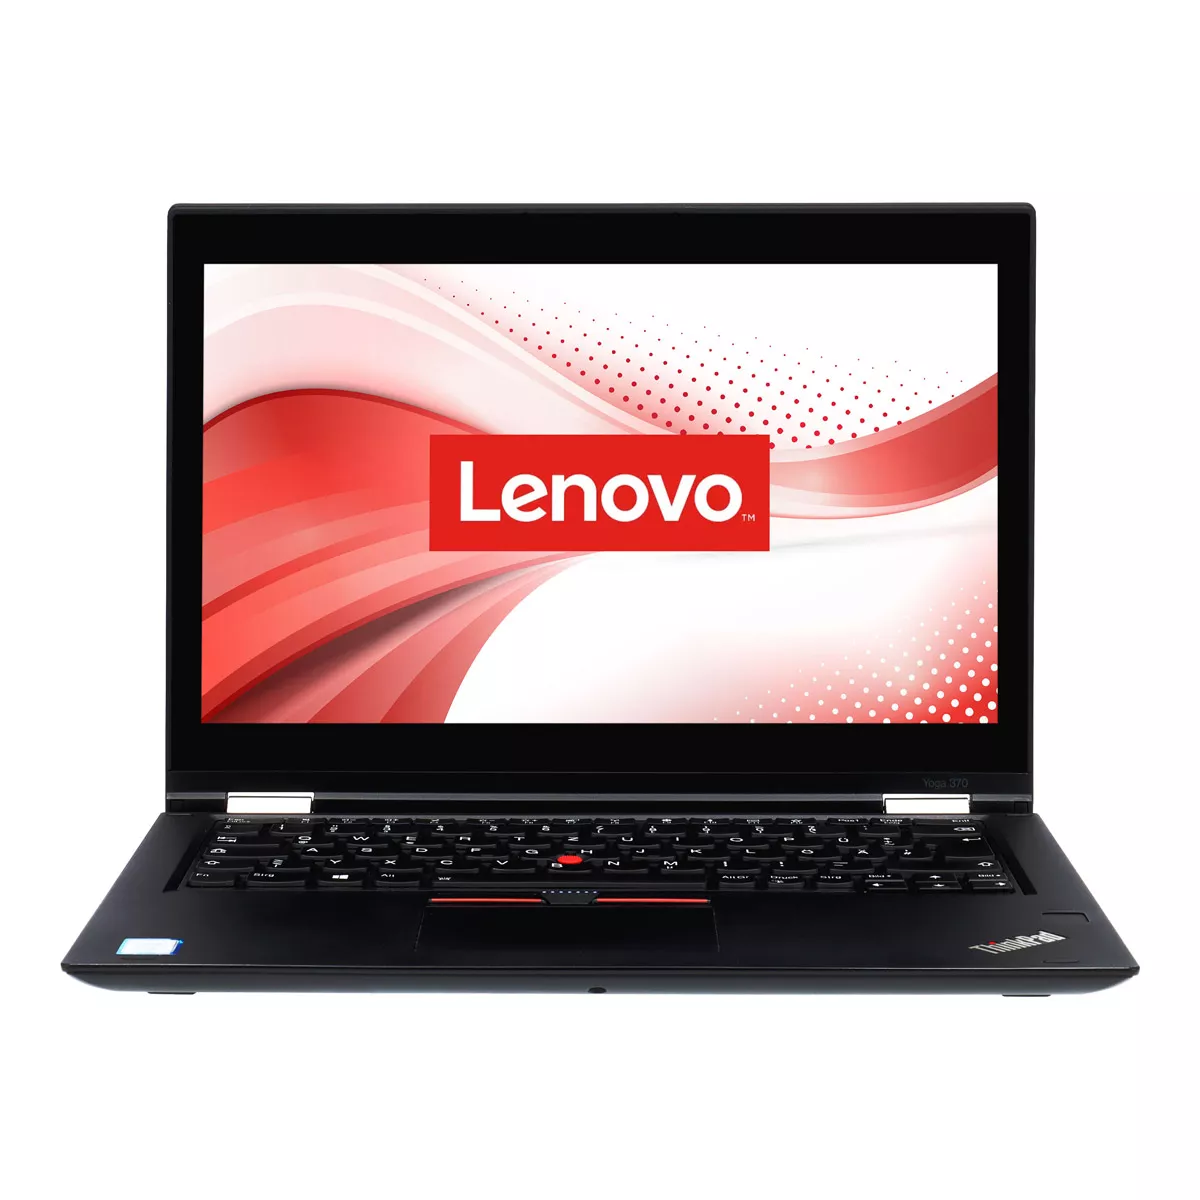 Lenovo ThinkPad X380 Yoga Core i7 8550U Full-HD Touch 500 GB M.2 SSD Webcam A+